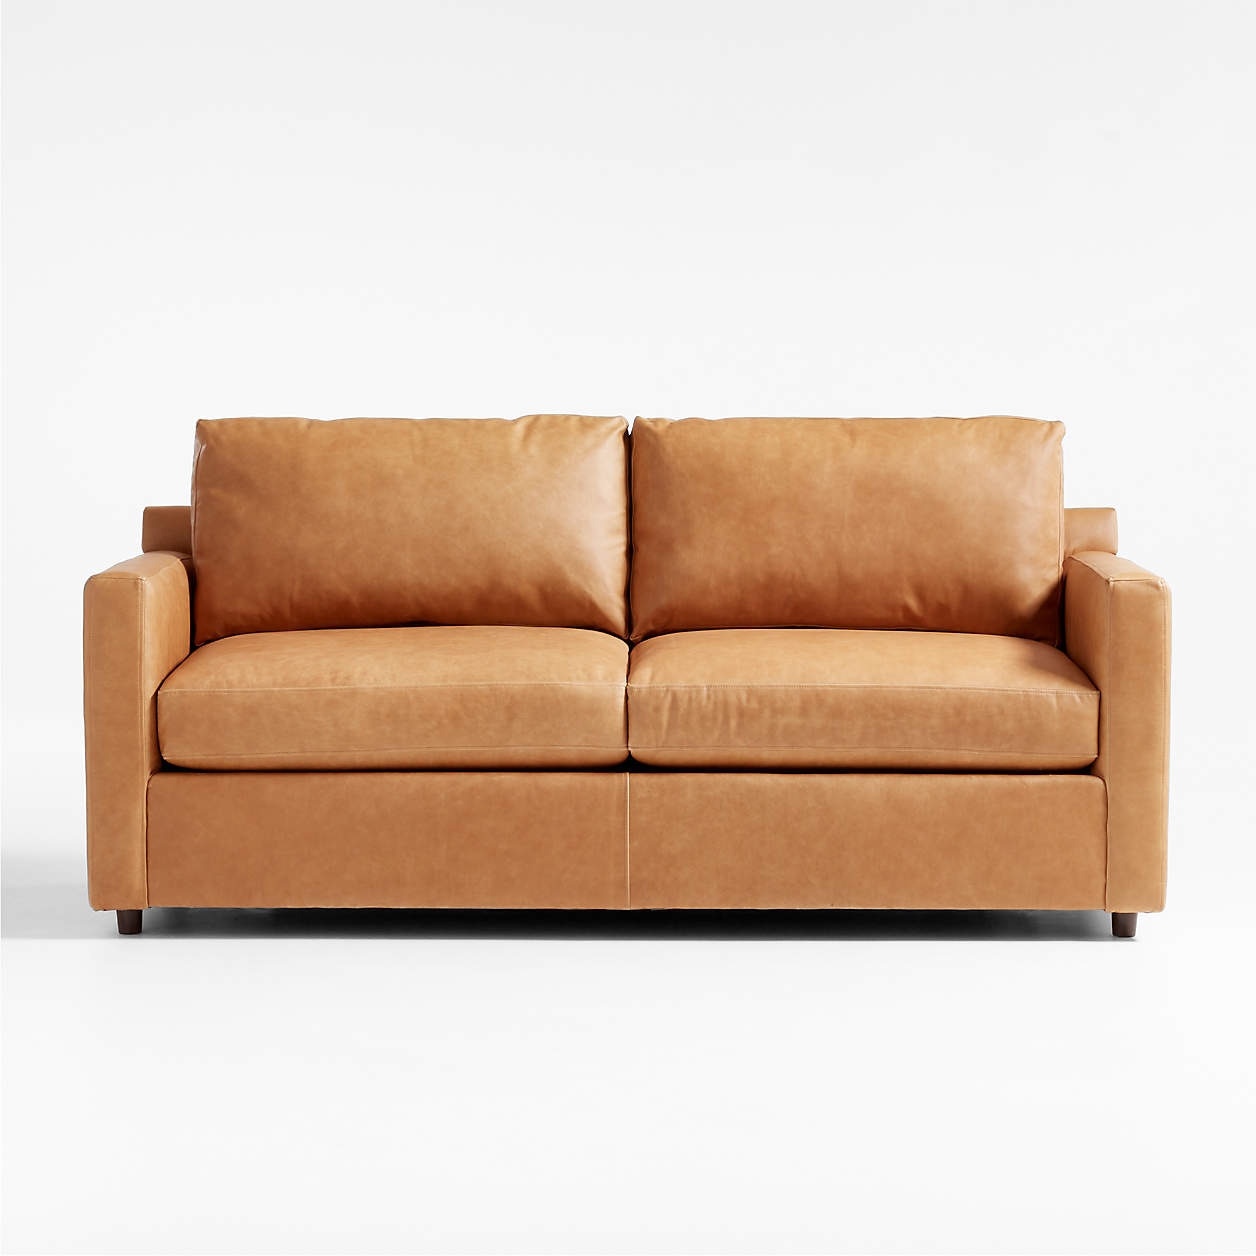 Barrett II Leather 2-Seat Queen Sleeper Sofa - Image 0